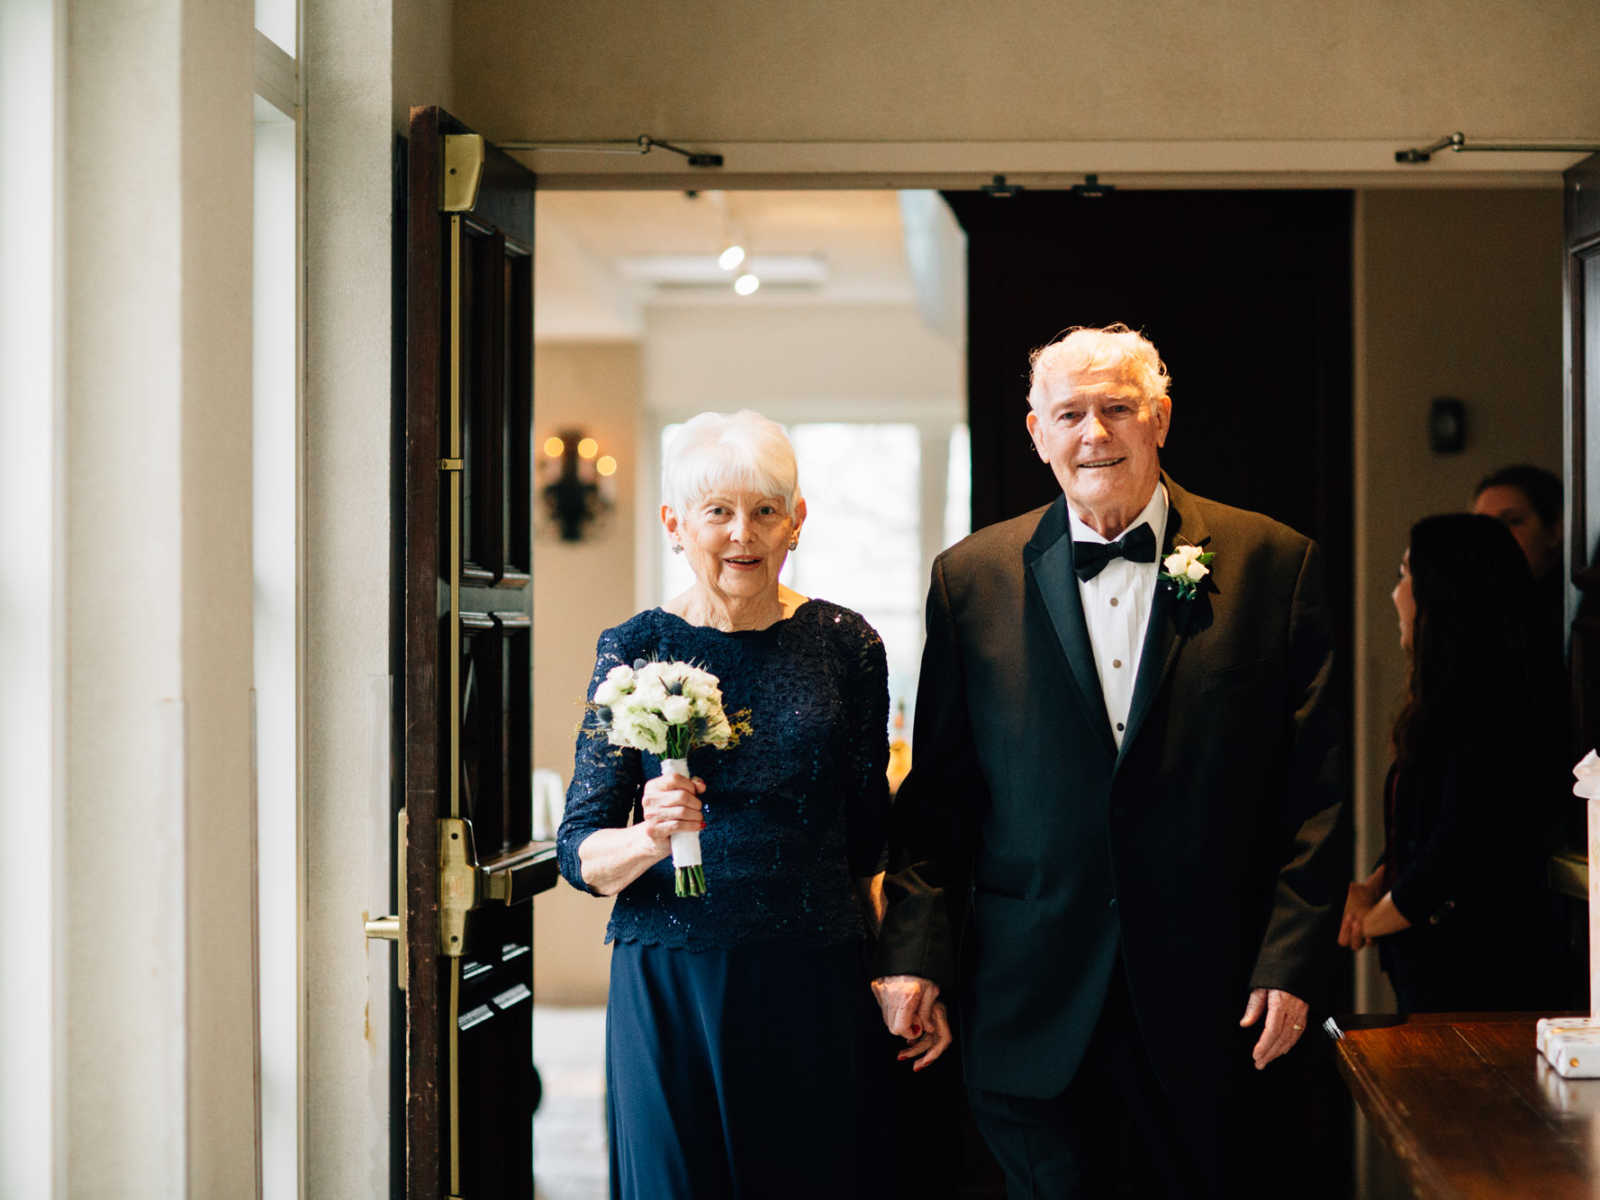 Elderly bride and groom smile hand in hand after wedding